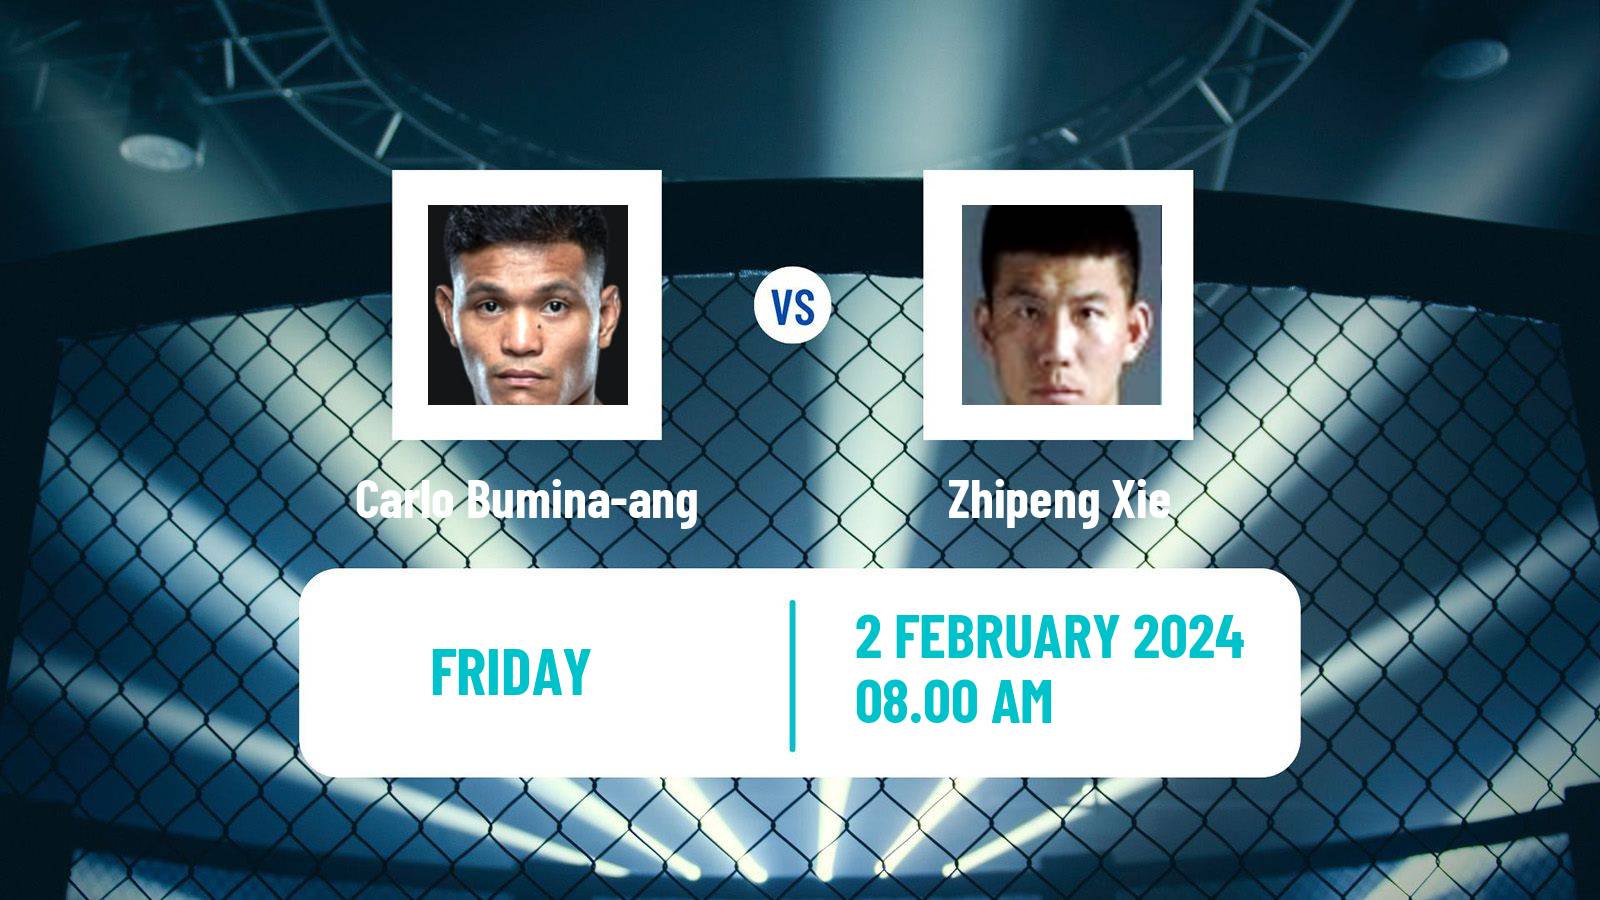 MMA Bantamweight One Championship Men Carlo Bumina-ang - Zhipeng Xie